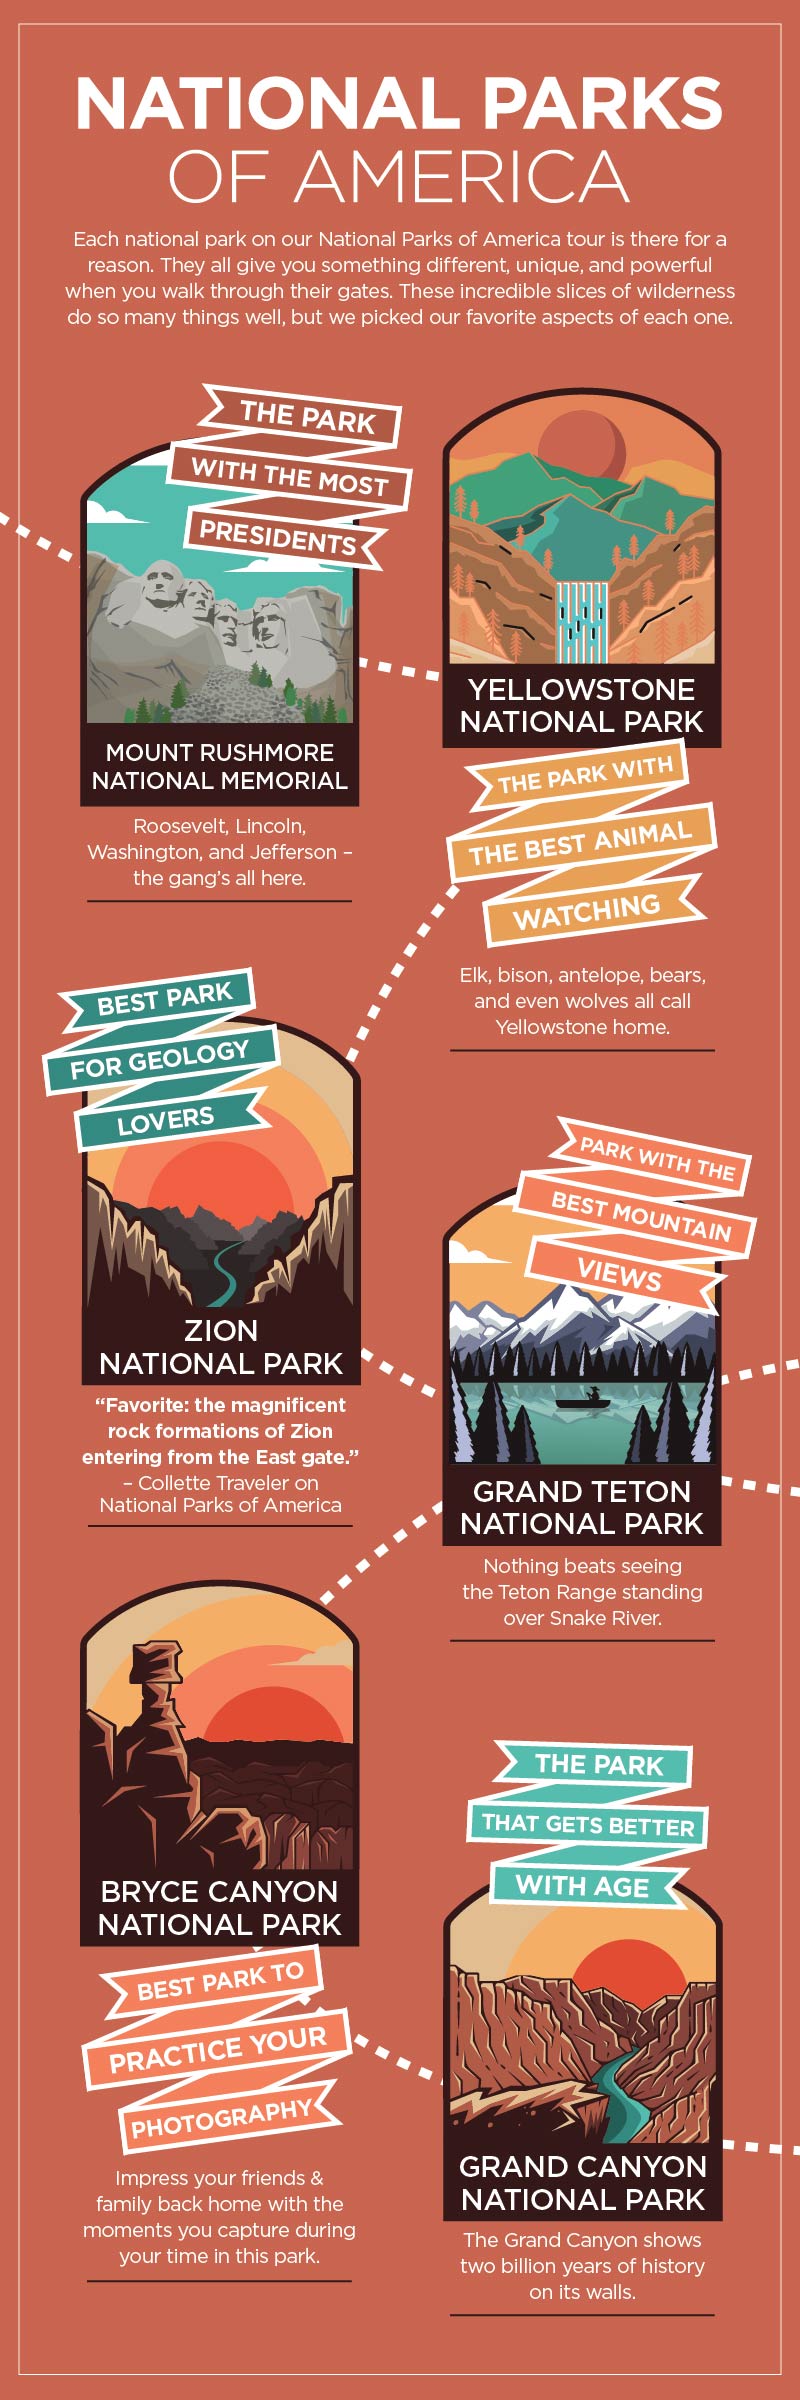 National Parks Blog Infographic FINAL 01